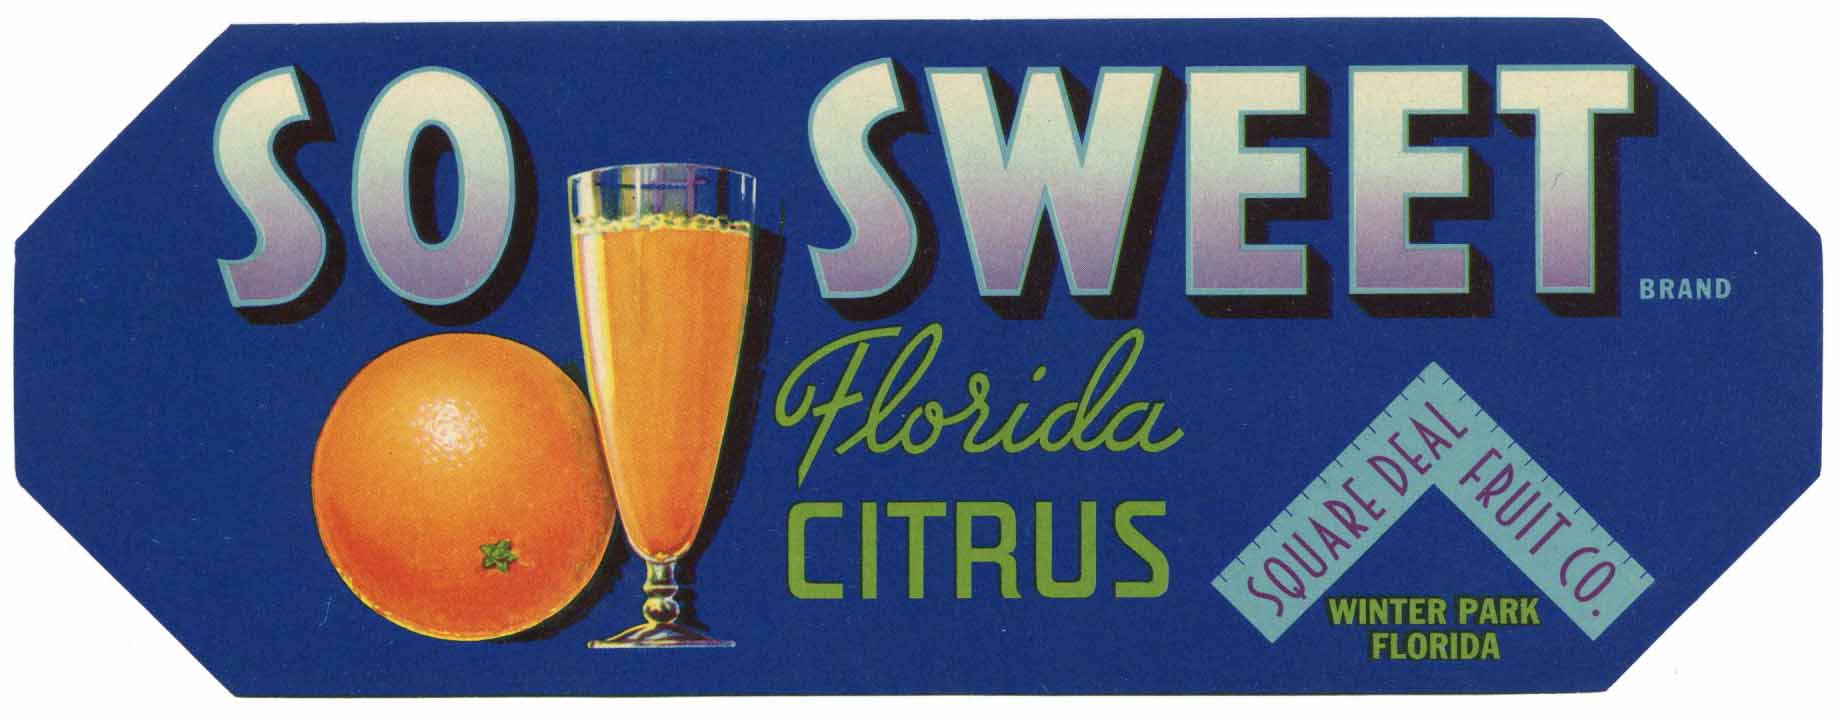 So Sweet Brand Vintage Winter Park Florida Citrus Crate Label